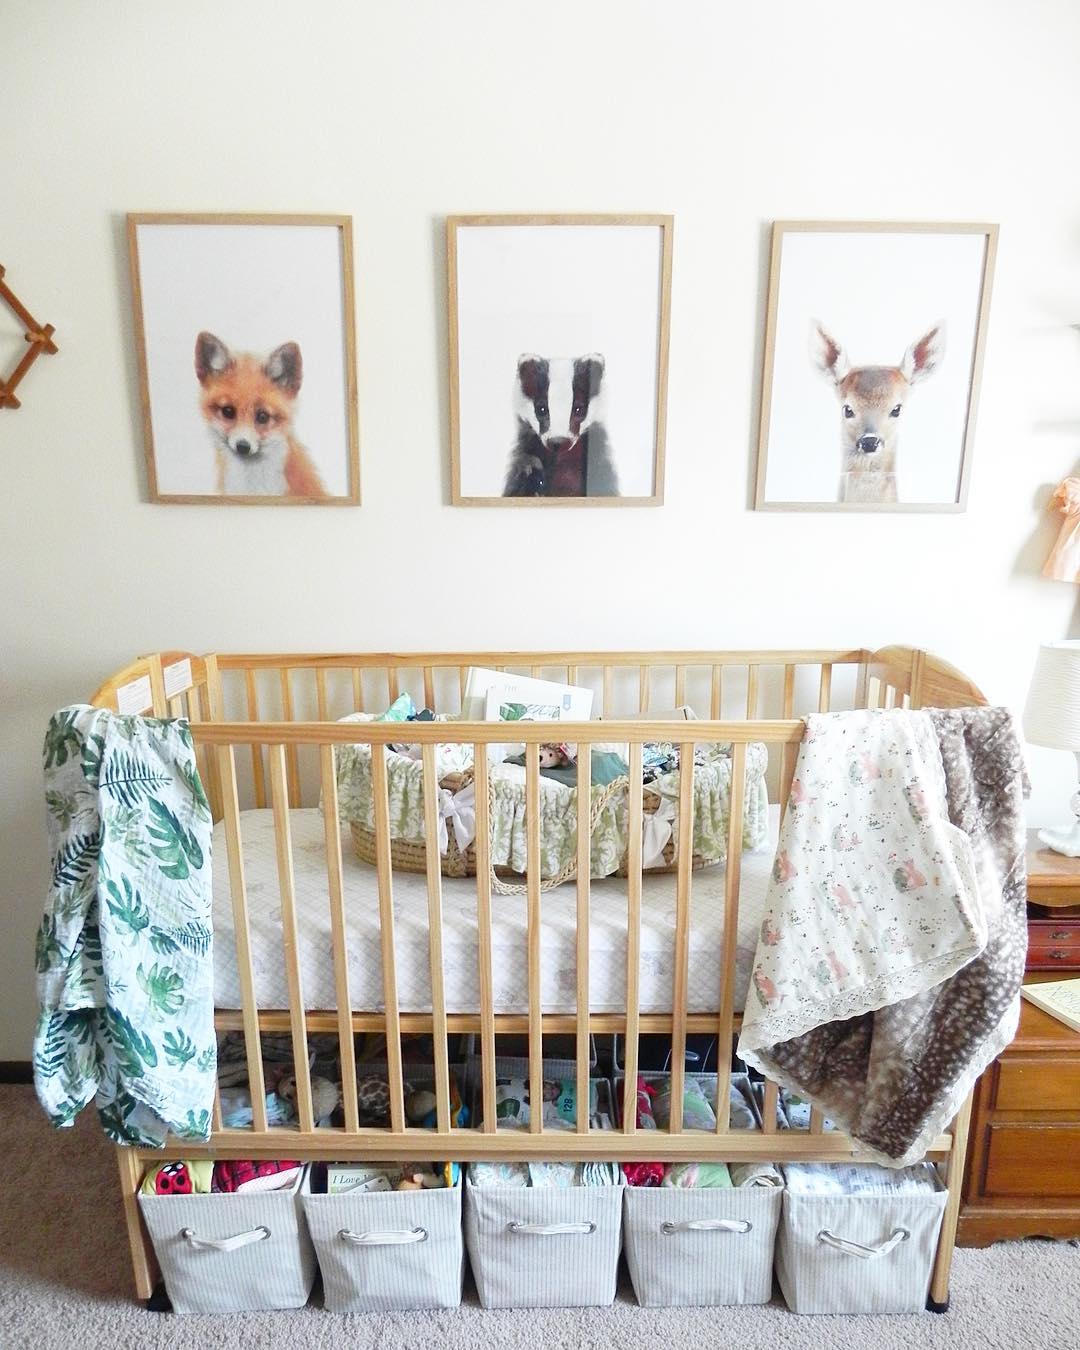 Storage bins under baby crib in small home. Photo by Instagram user @4_little_1